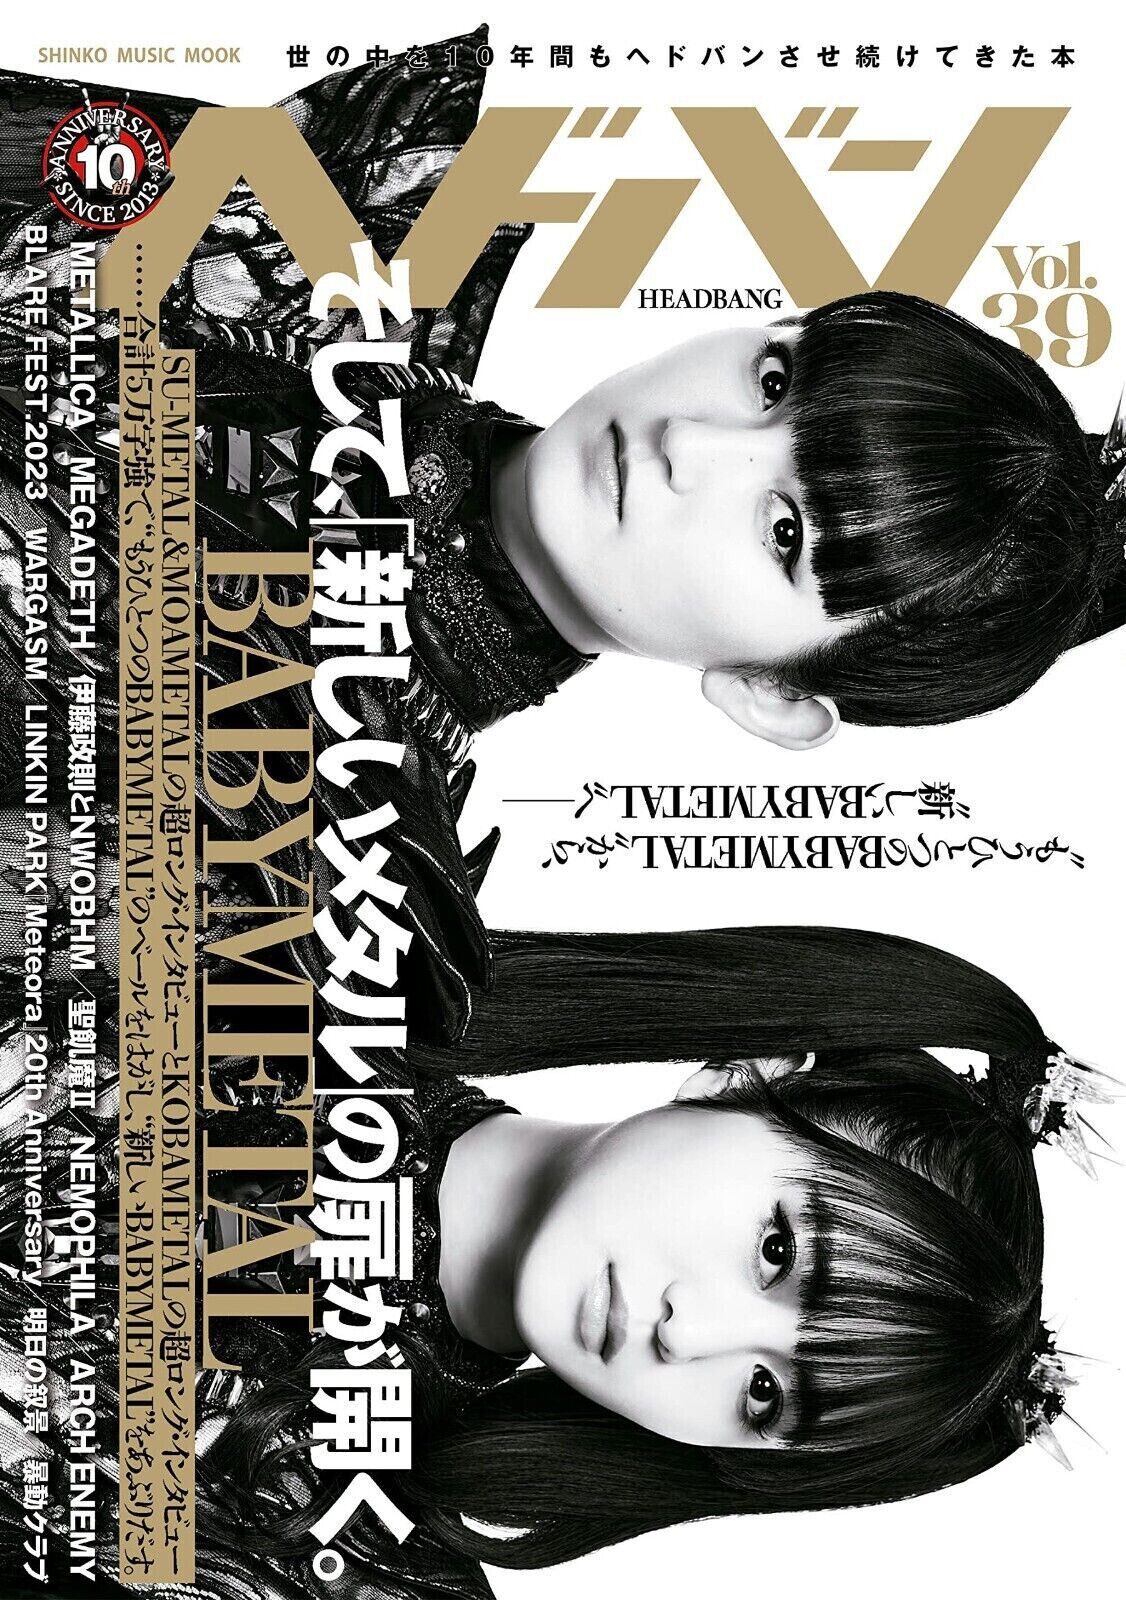 Head Bang vol.39 Japanese Magazine BABYMETAL METALLICA MEGADETH